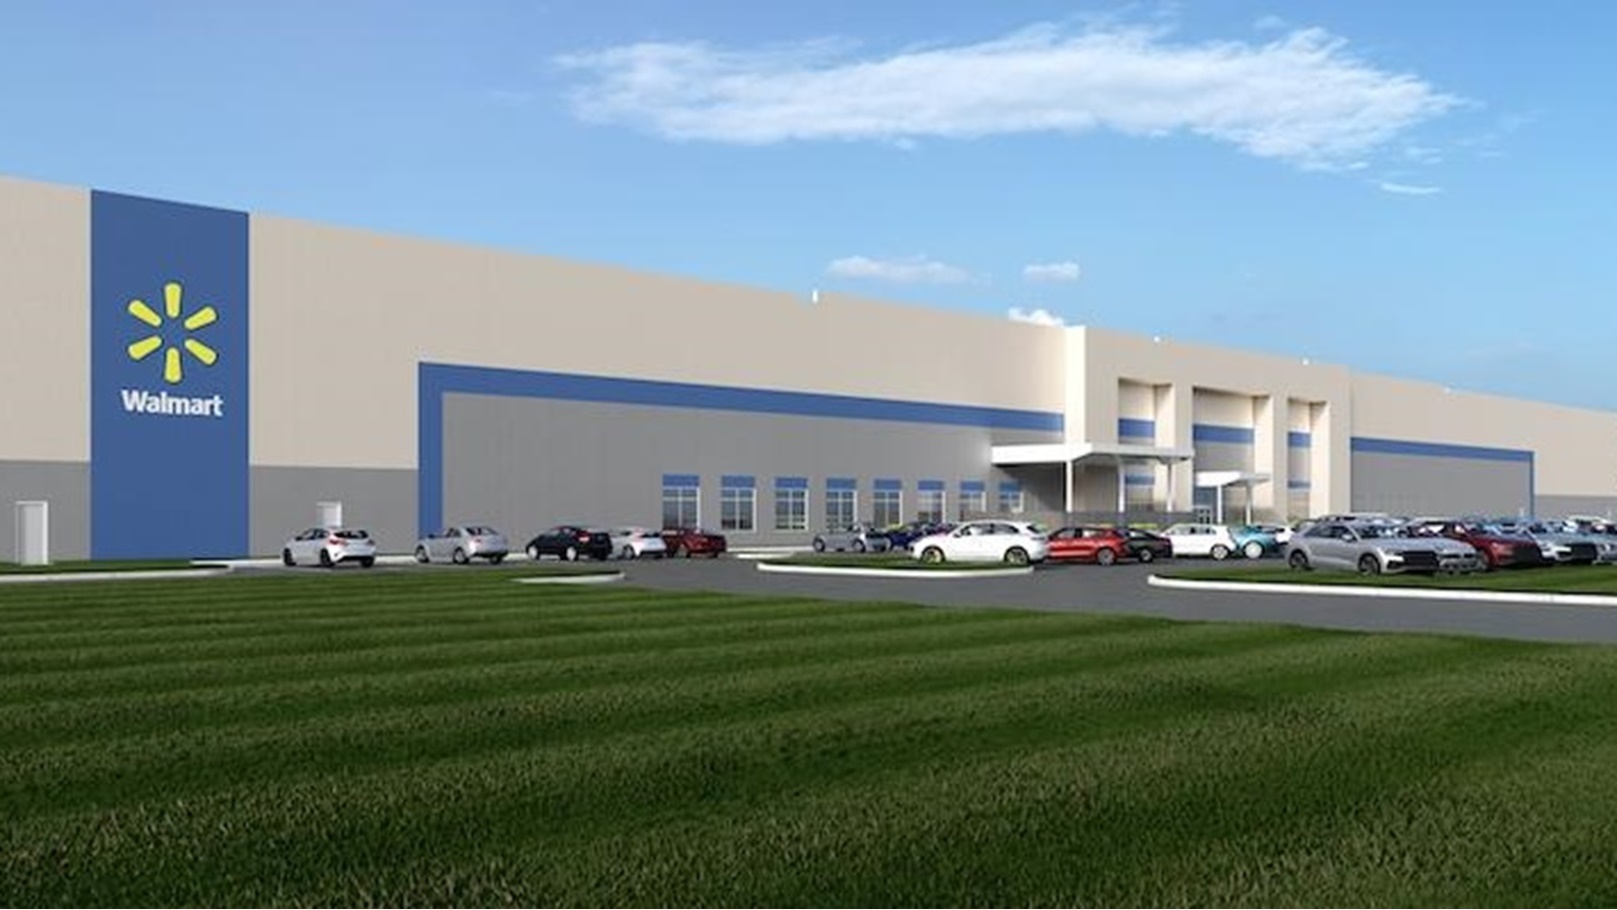 Walmart ecommerc fulfillment center-Shippensburg PA-rendering